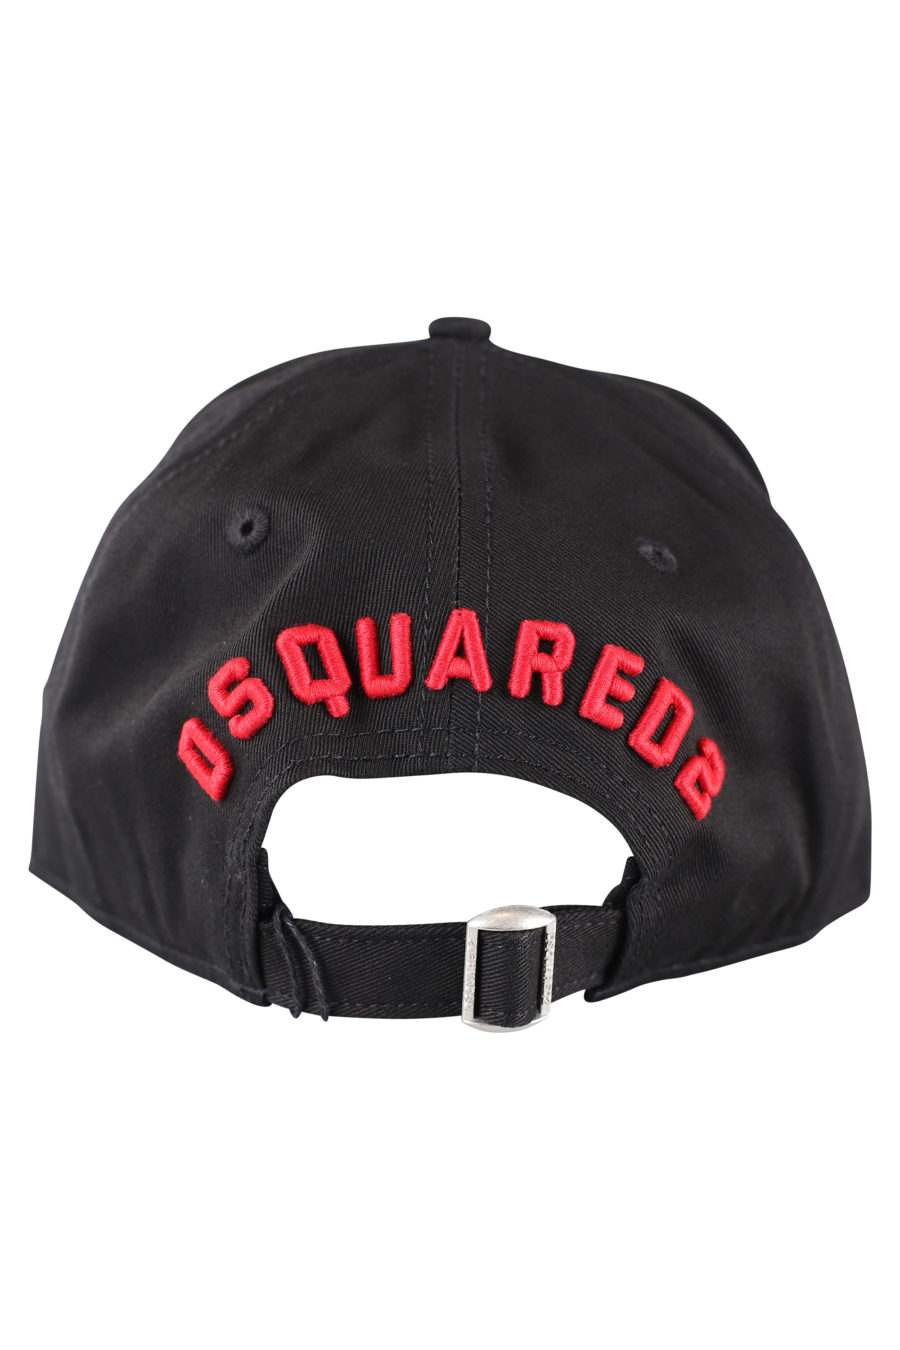 Gorra negra con logo "icon" rojo - IMG 9966